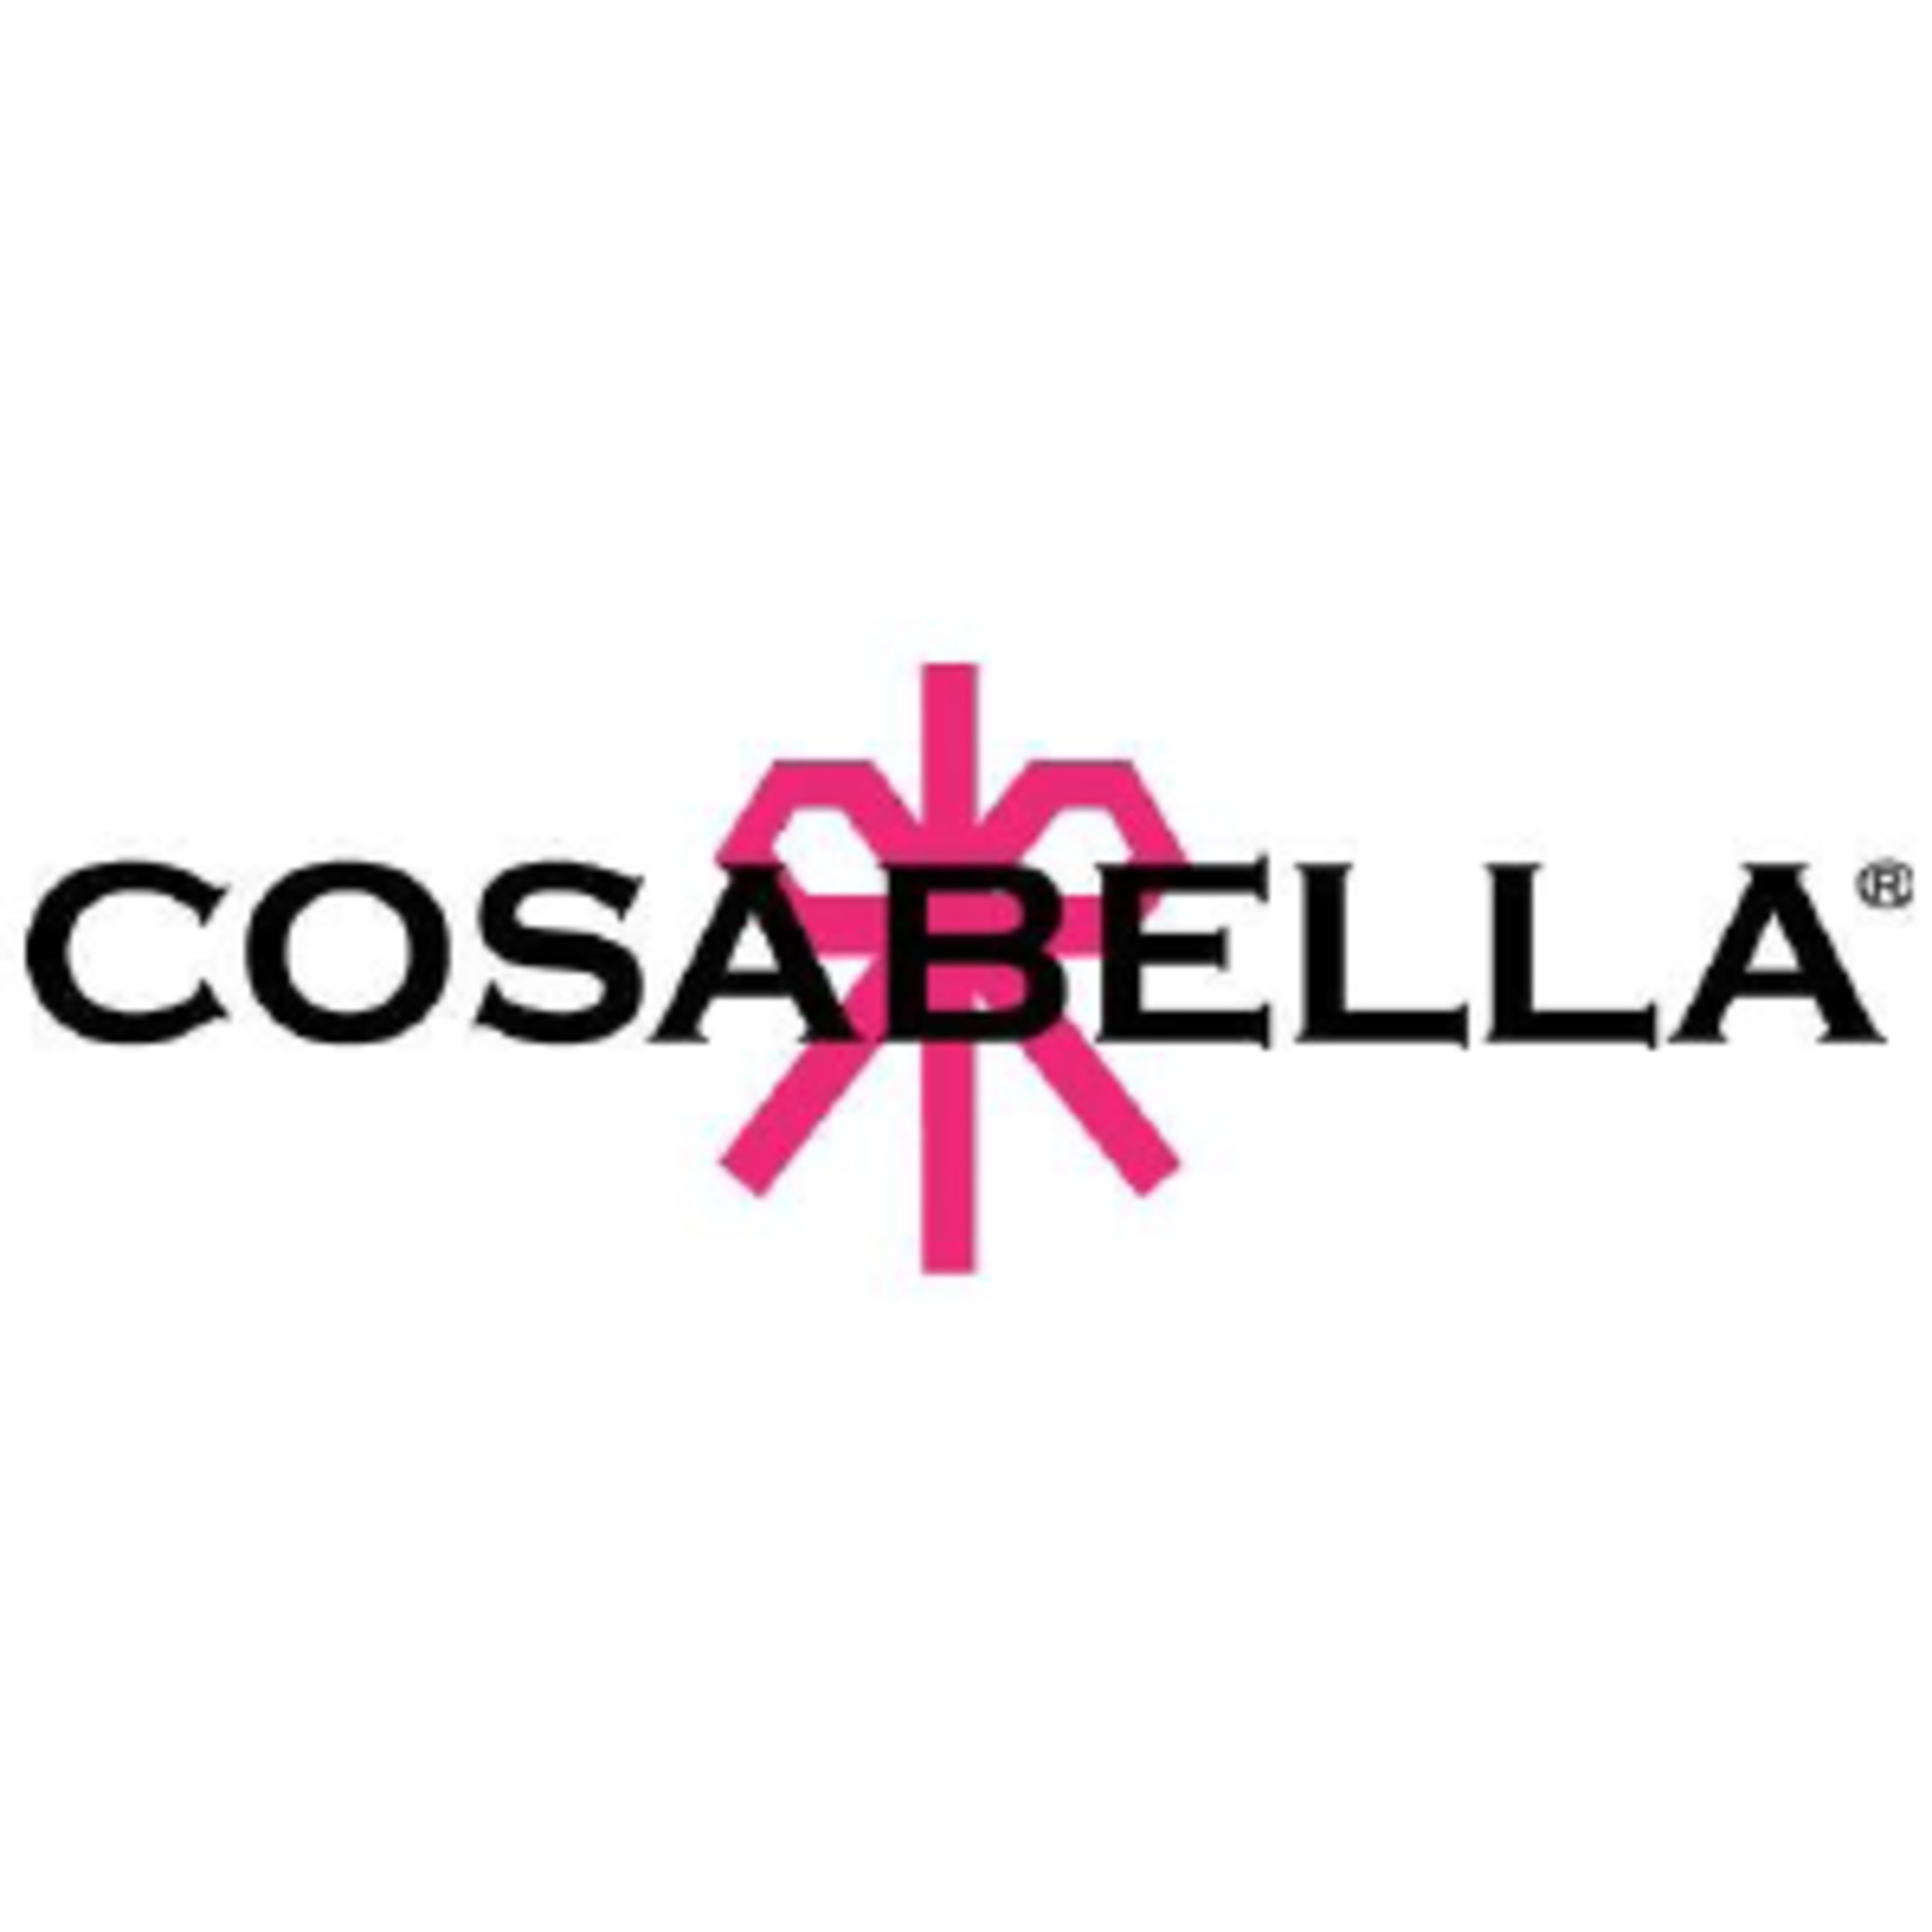 CosabellaCode